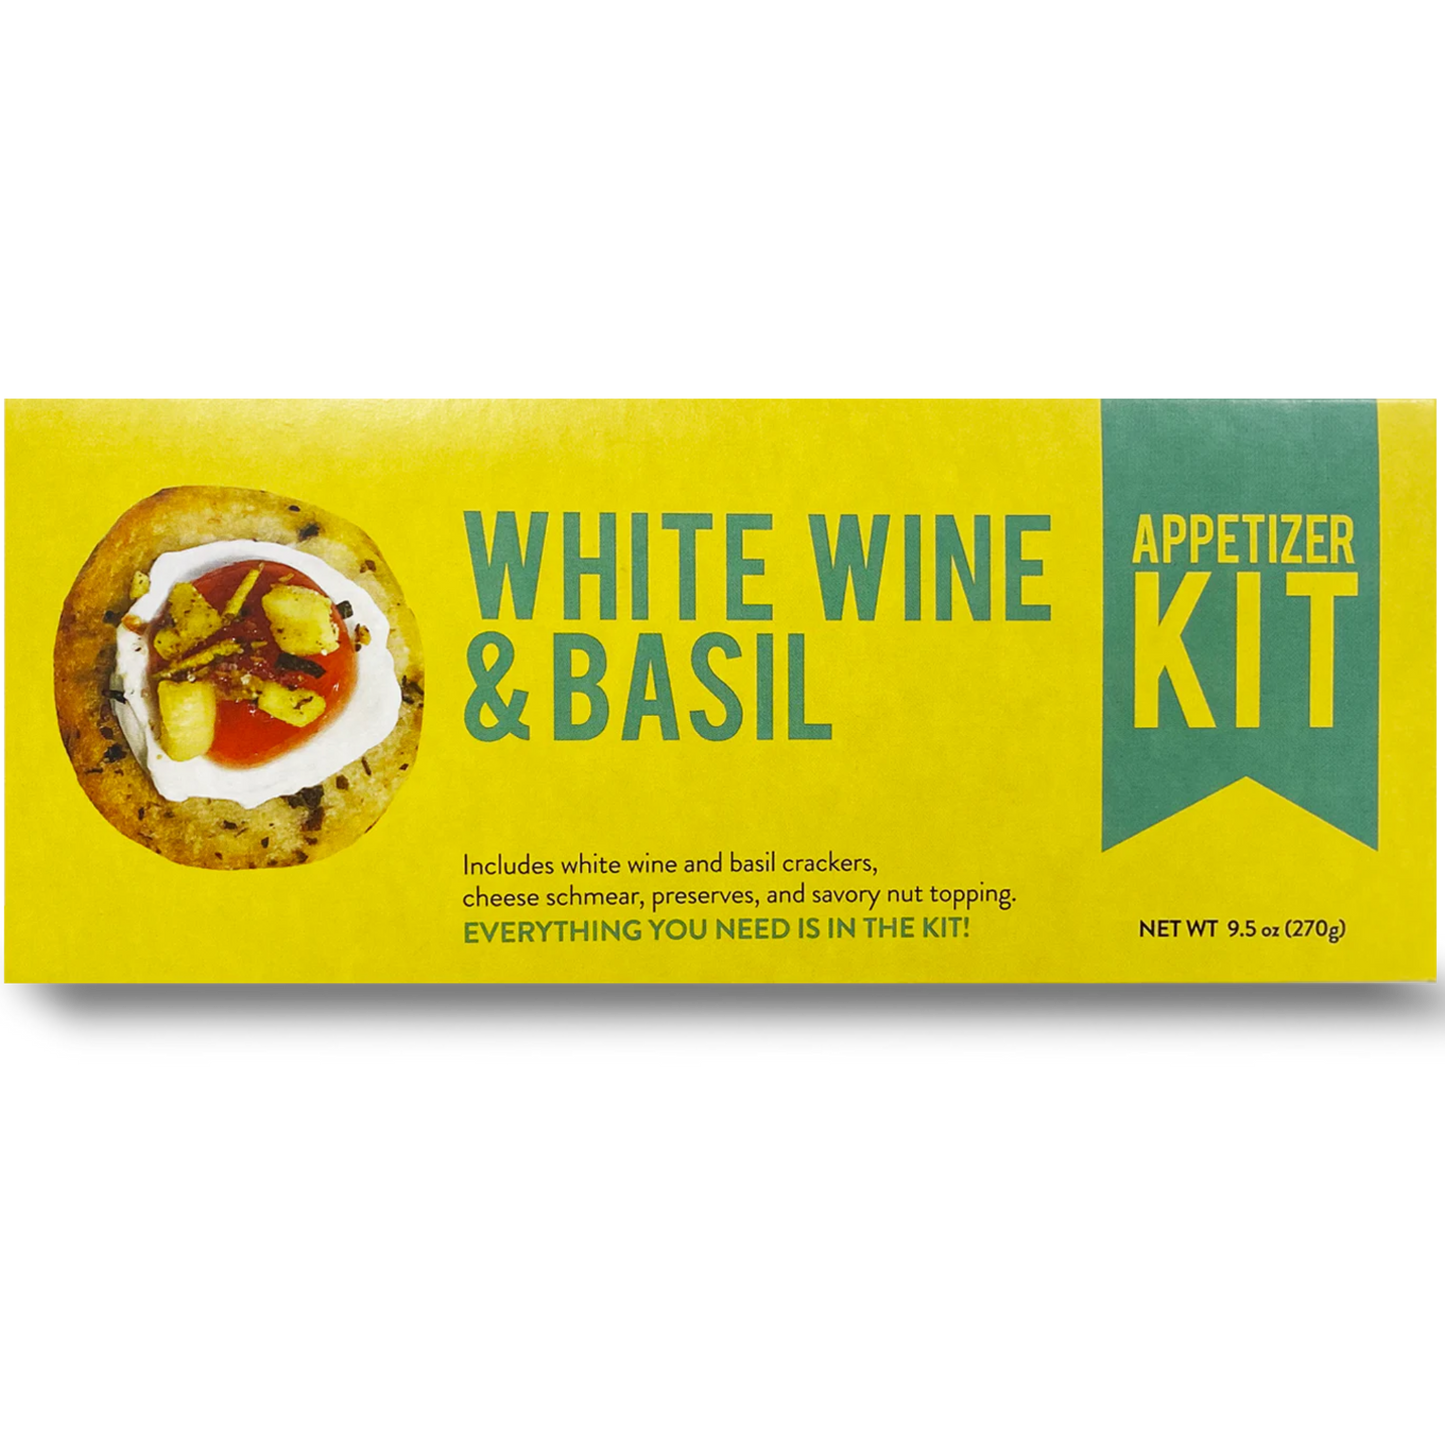 White Wine & Basil Appetizer Kit